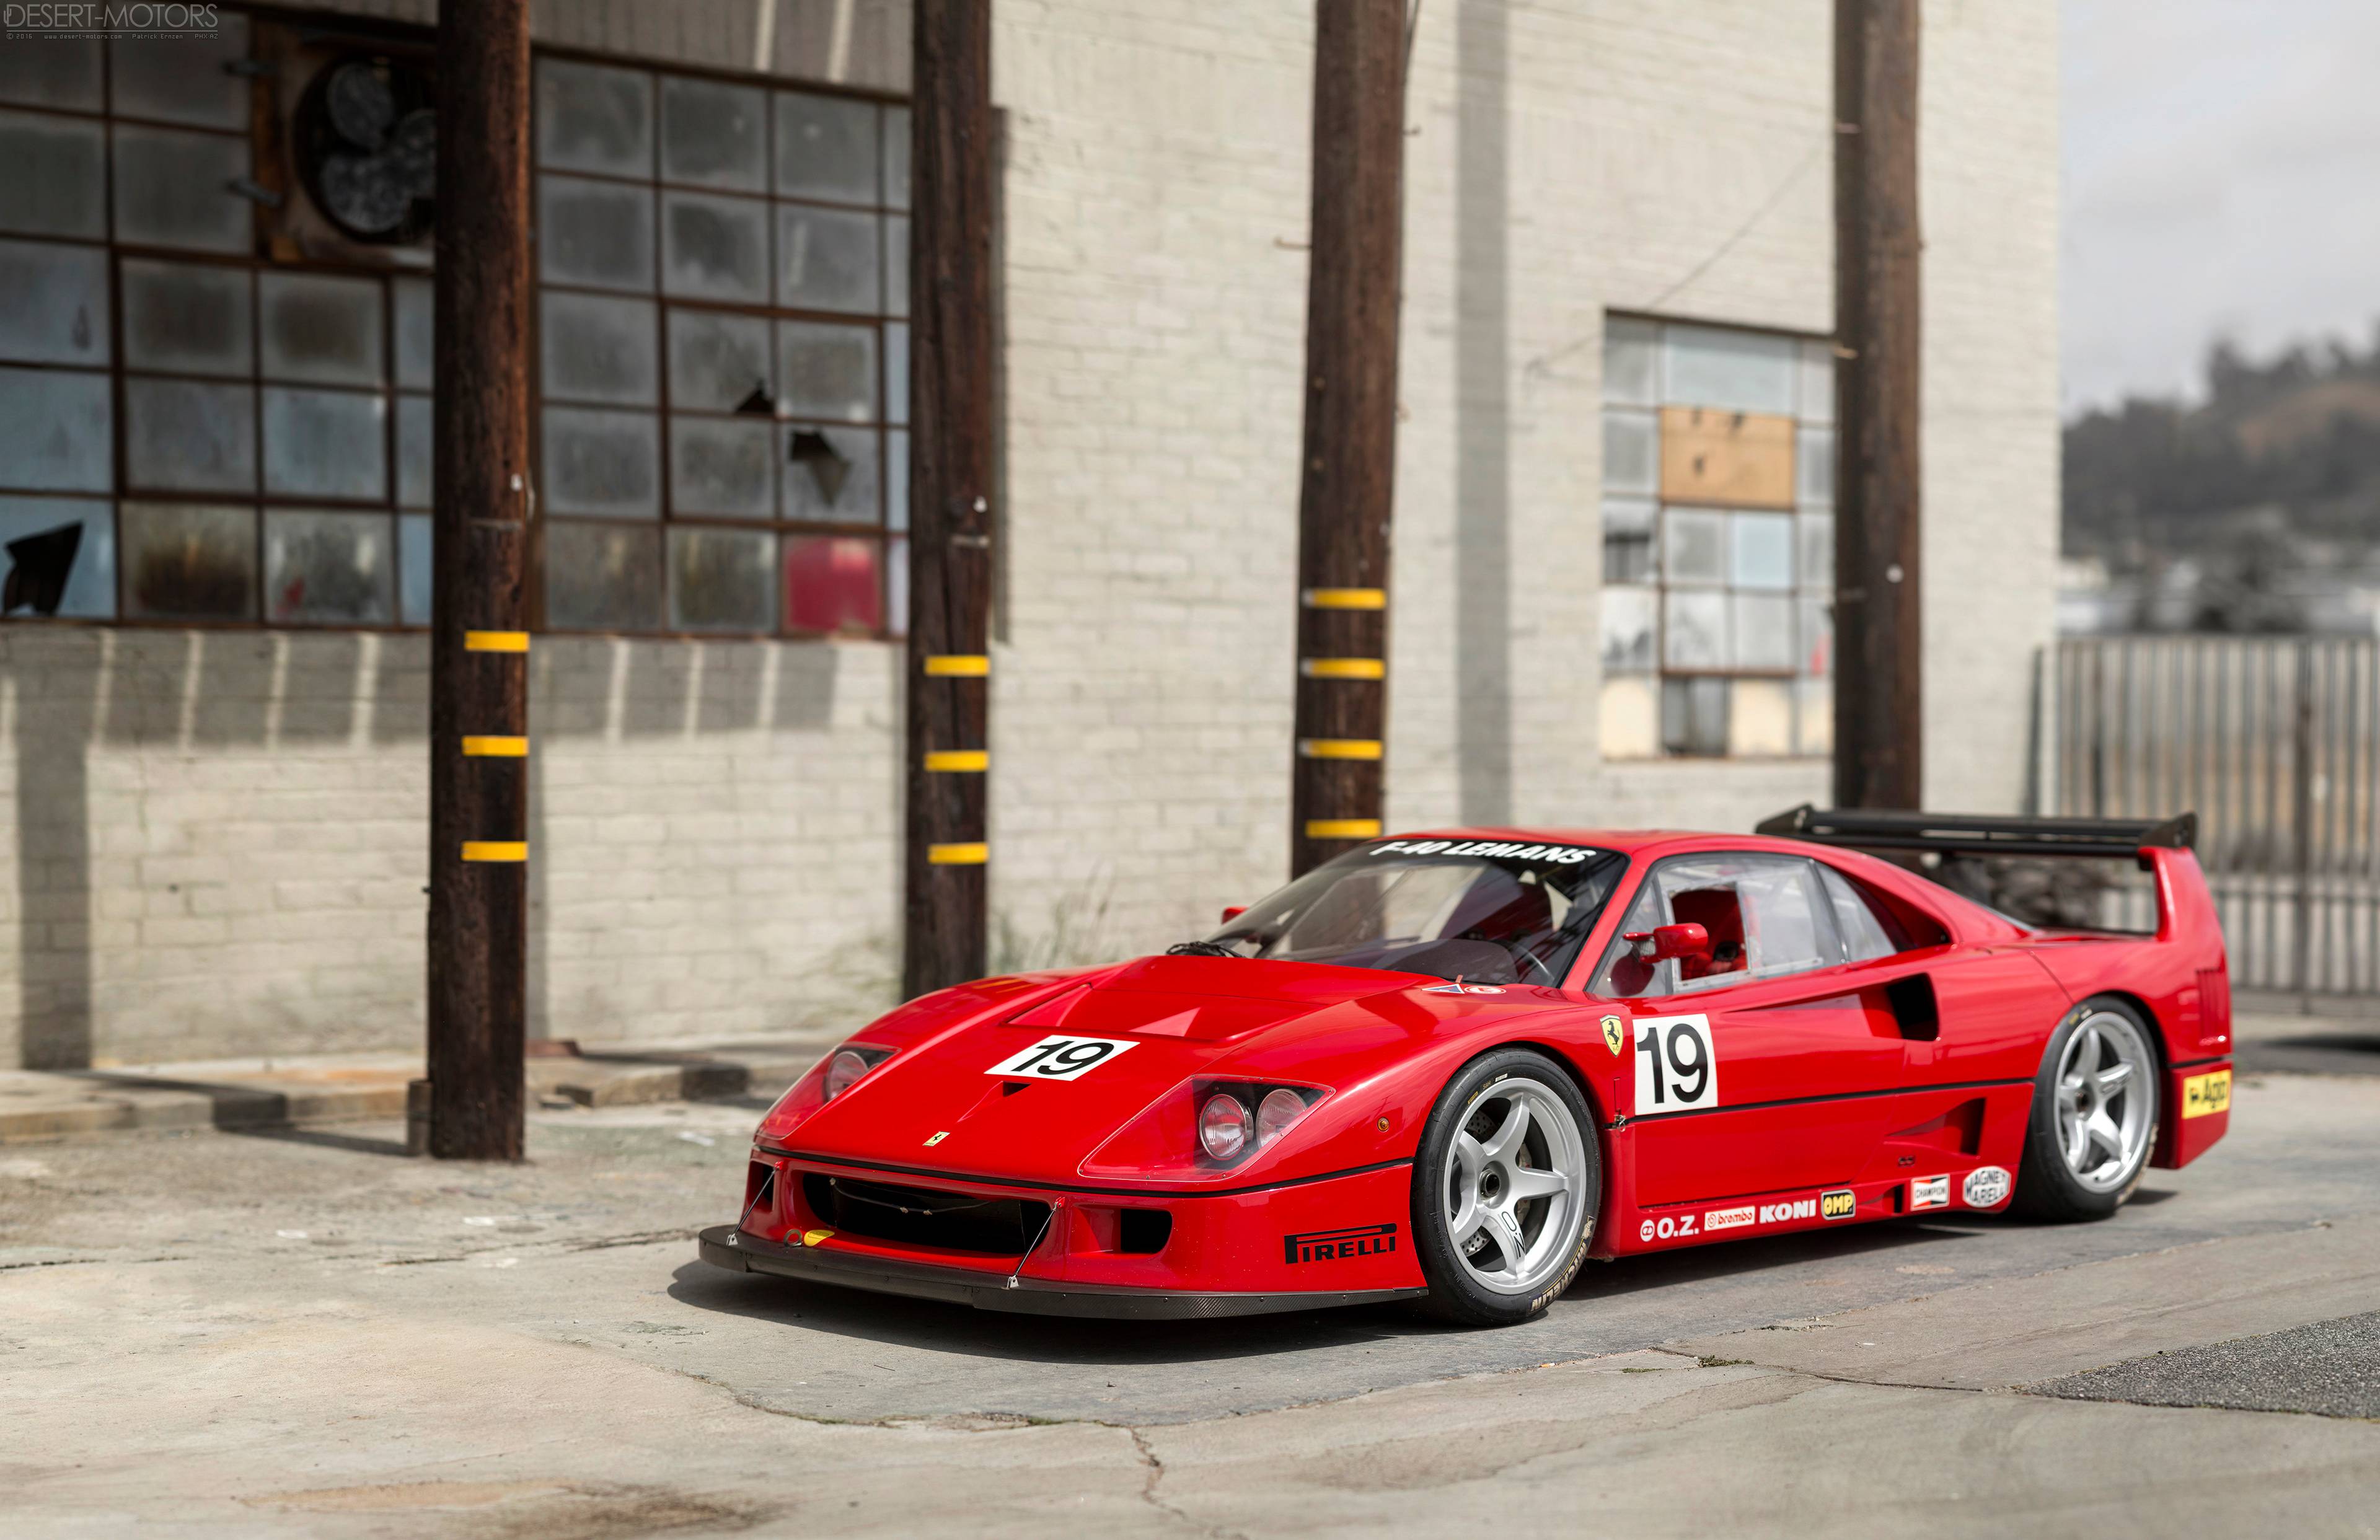 alt="1994 Ferrari F40 LM"